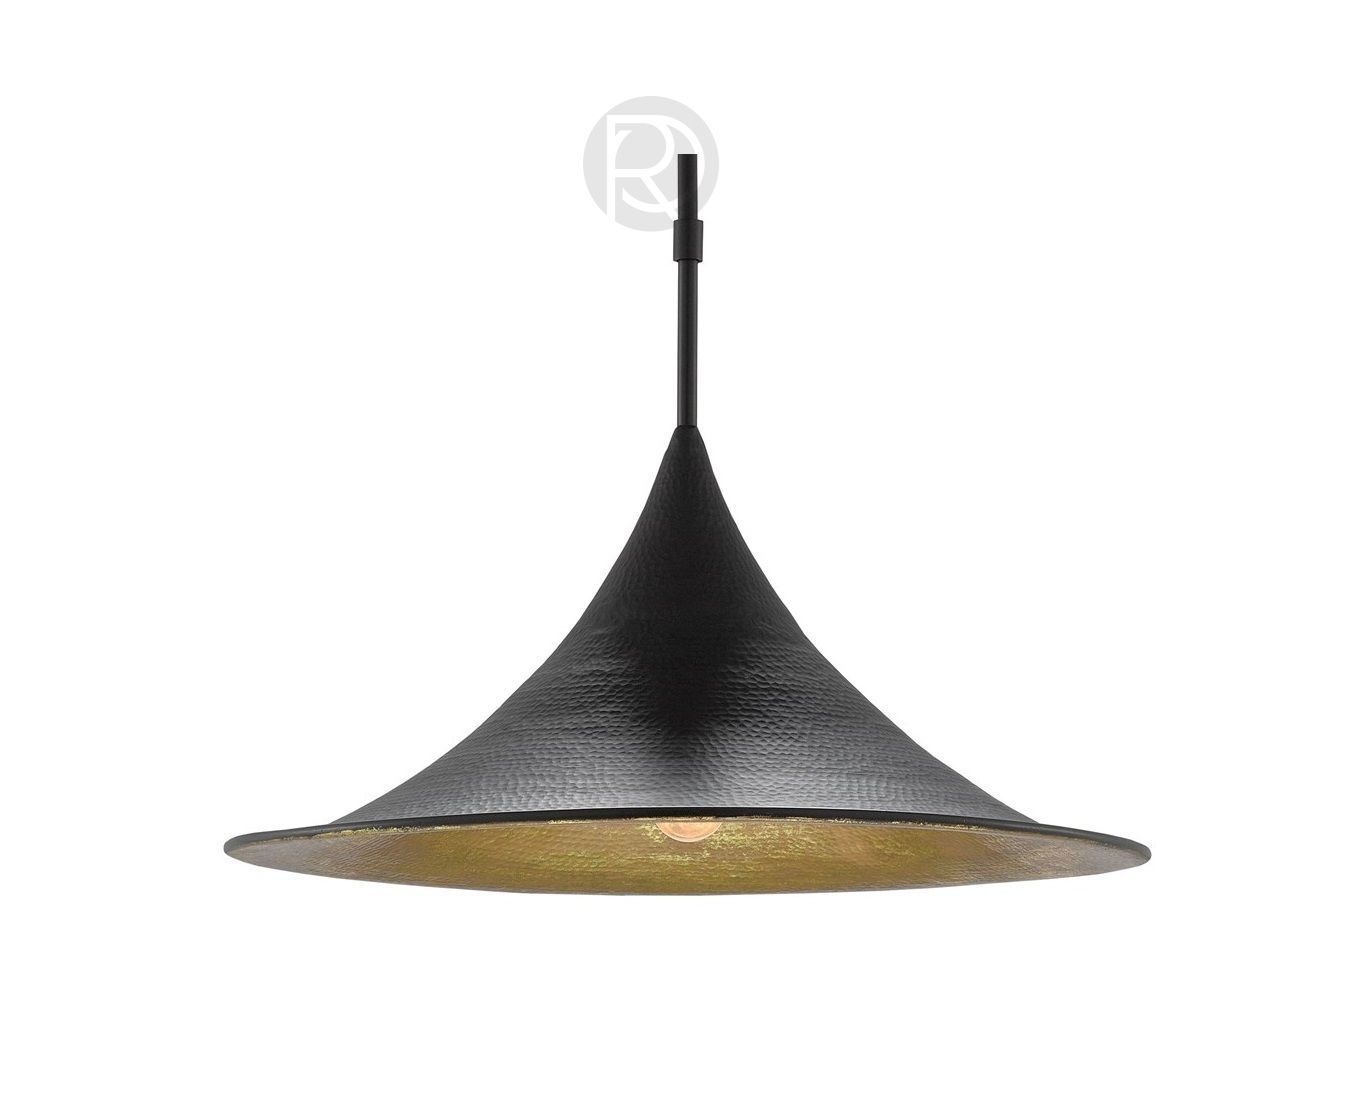 Hanging lamp ABERFOYLE by Currey & Company